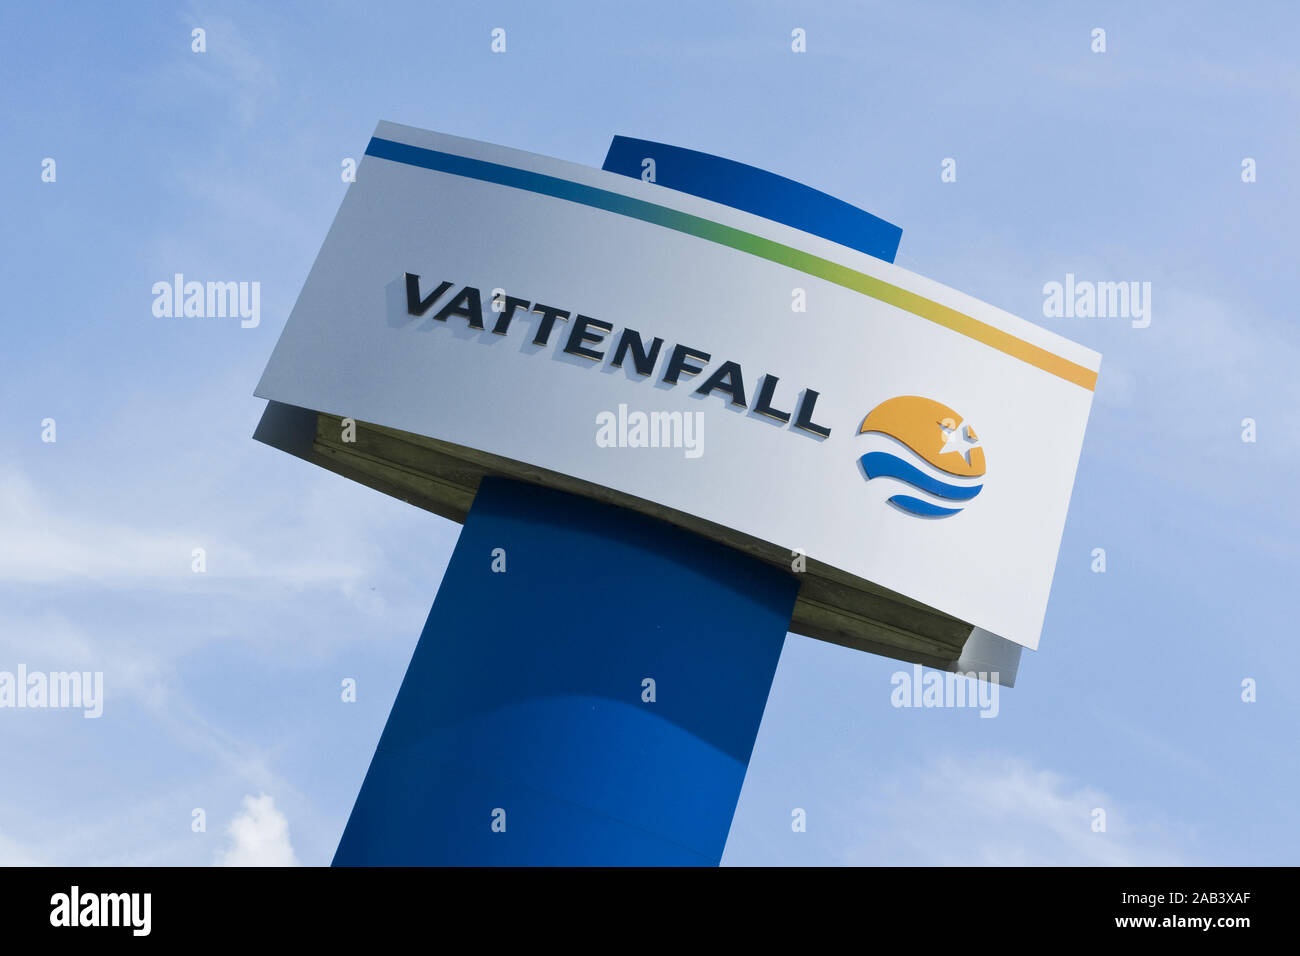 Vattenfall Firmenschild am Standort in Brunsb'ttel |società Vattenfall firmare in corrispondenza della posizione in Brunsb'ttel| Foto Stock